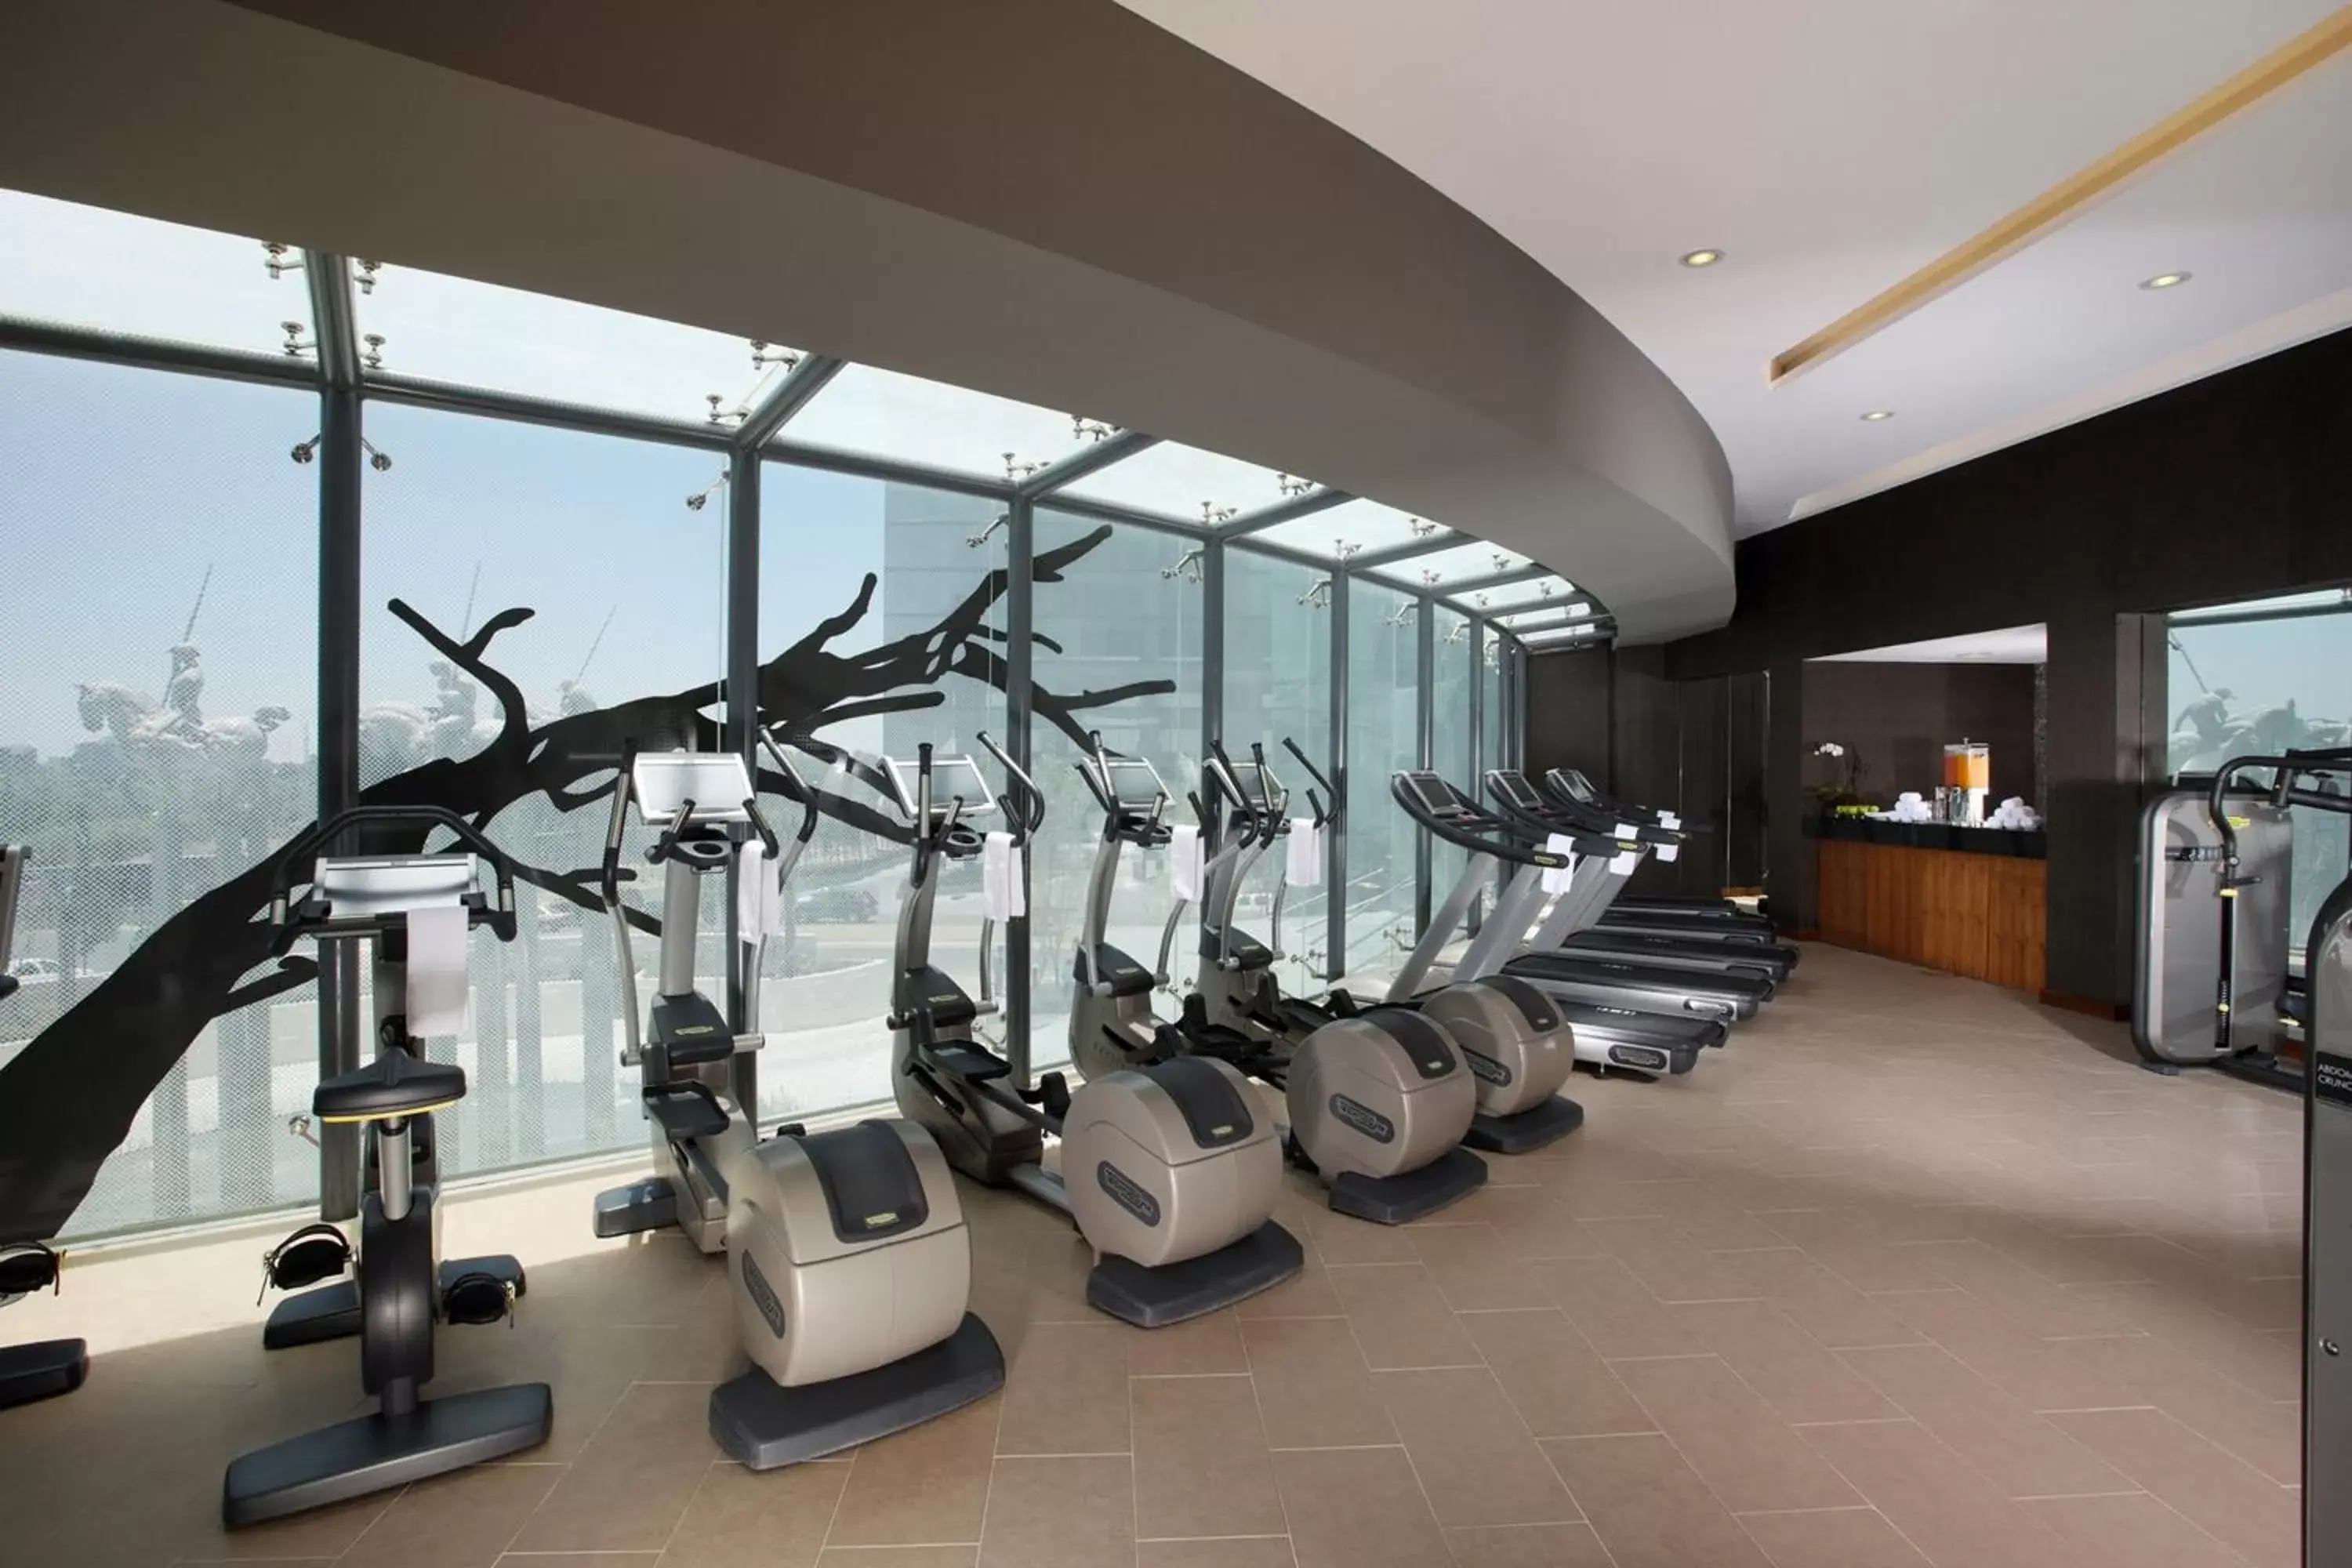 Fitness centre/facilities, Fitness Center/Facilities in JW Marriott Hotel Mexico City Santa Fe